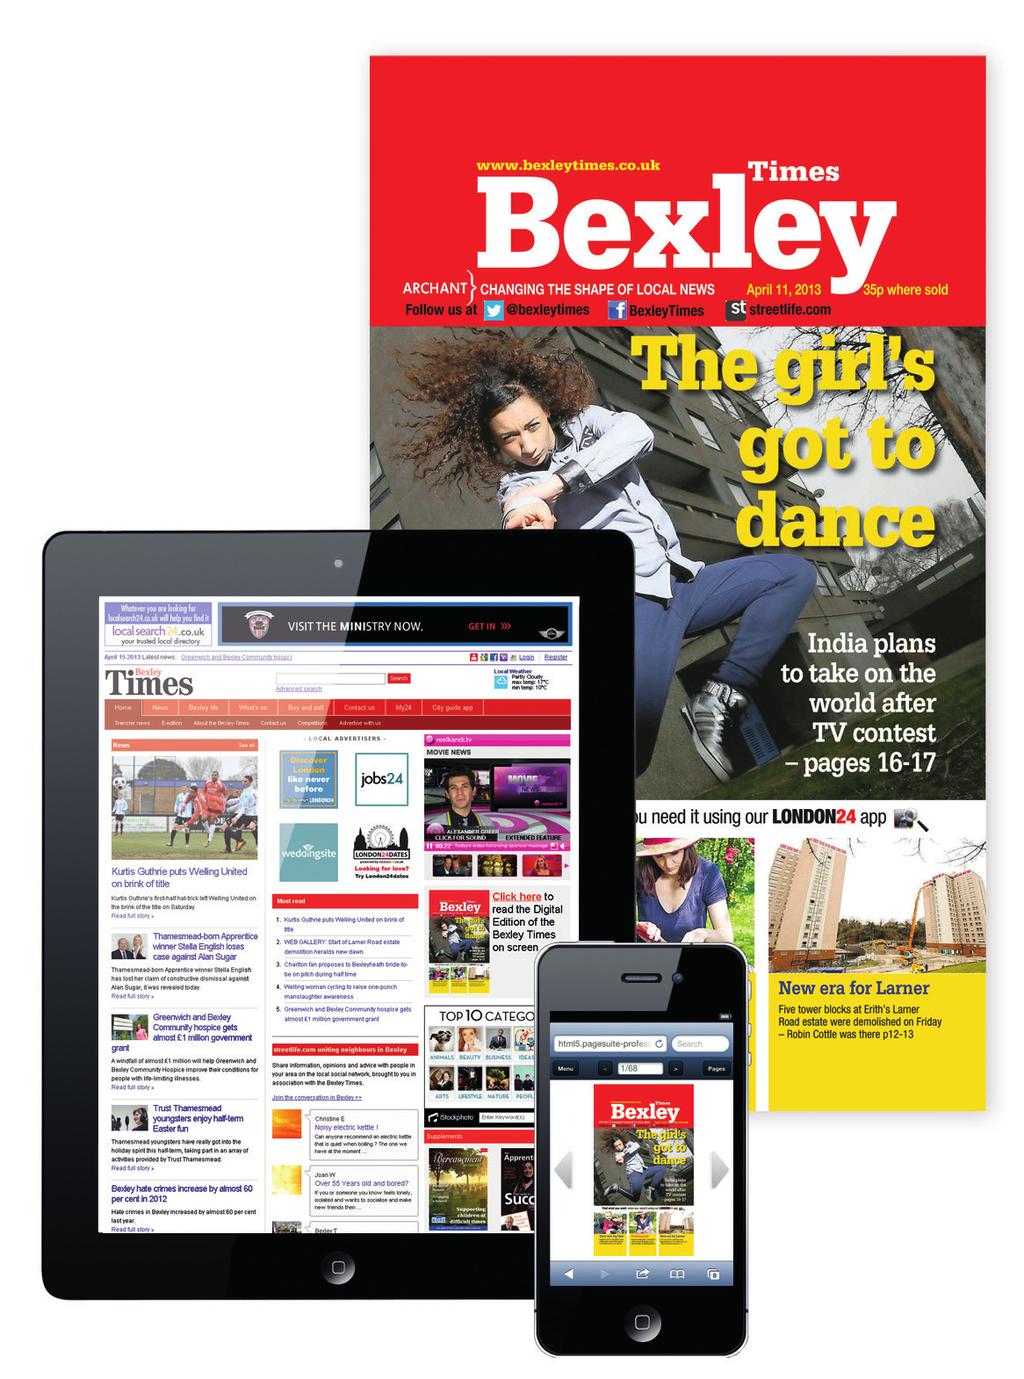 www.bexleytimes.co.uk BEXLEY TIMES WEBSITE E-EDITION 86,214 3,588 355 Adult wkly reach Av.